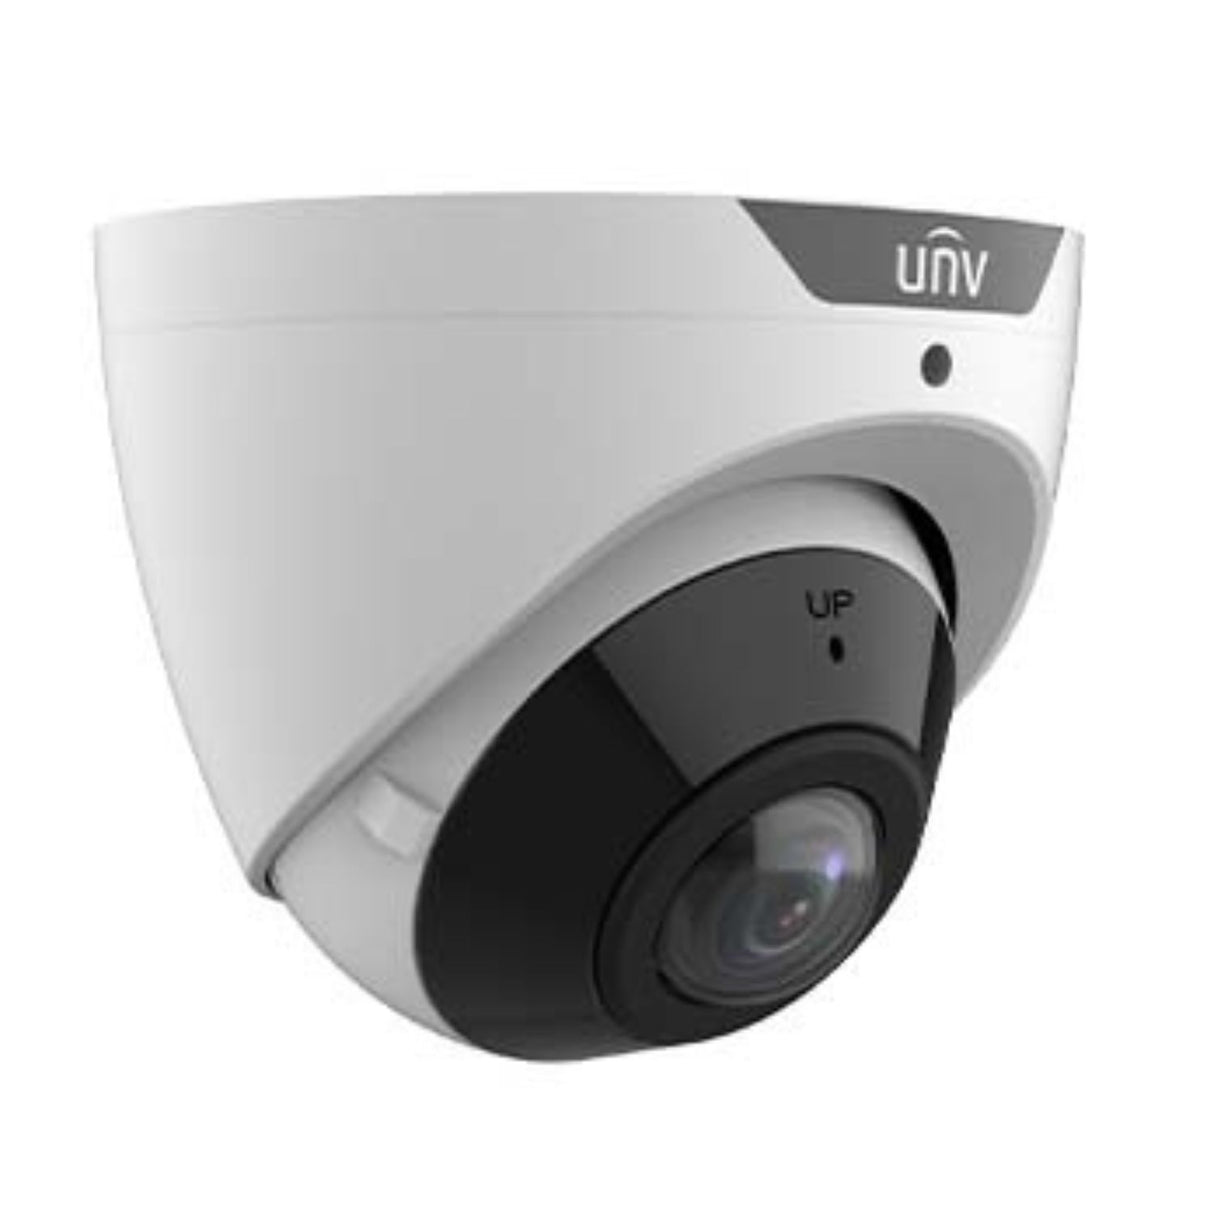 Uniview Security Camera: 5MP HD Wide Angle Intelligent IR Fixed Eyeball Network Camera - IPC3605SB-ADF16KM-I0